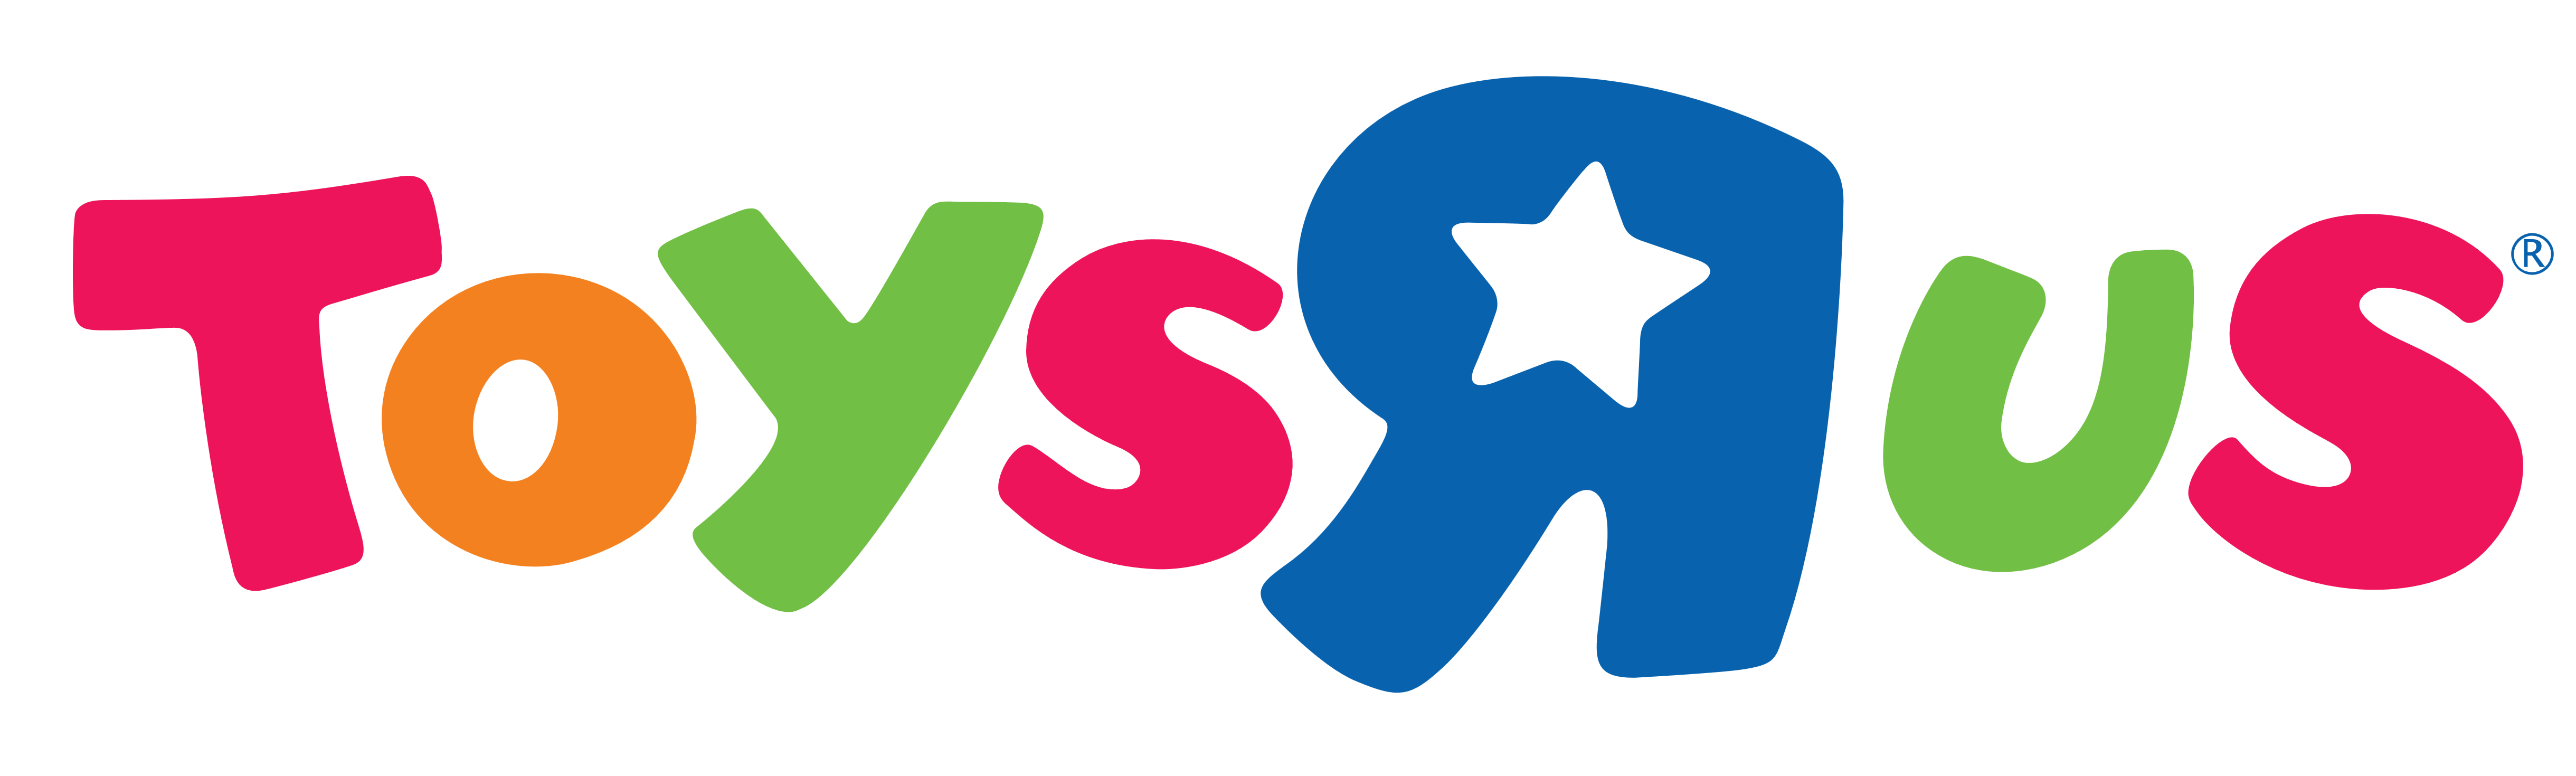 Toys R Us logo, logotype